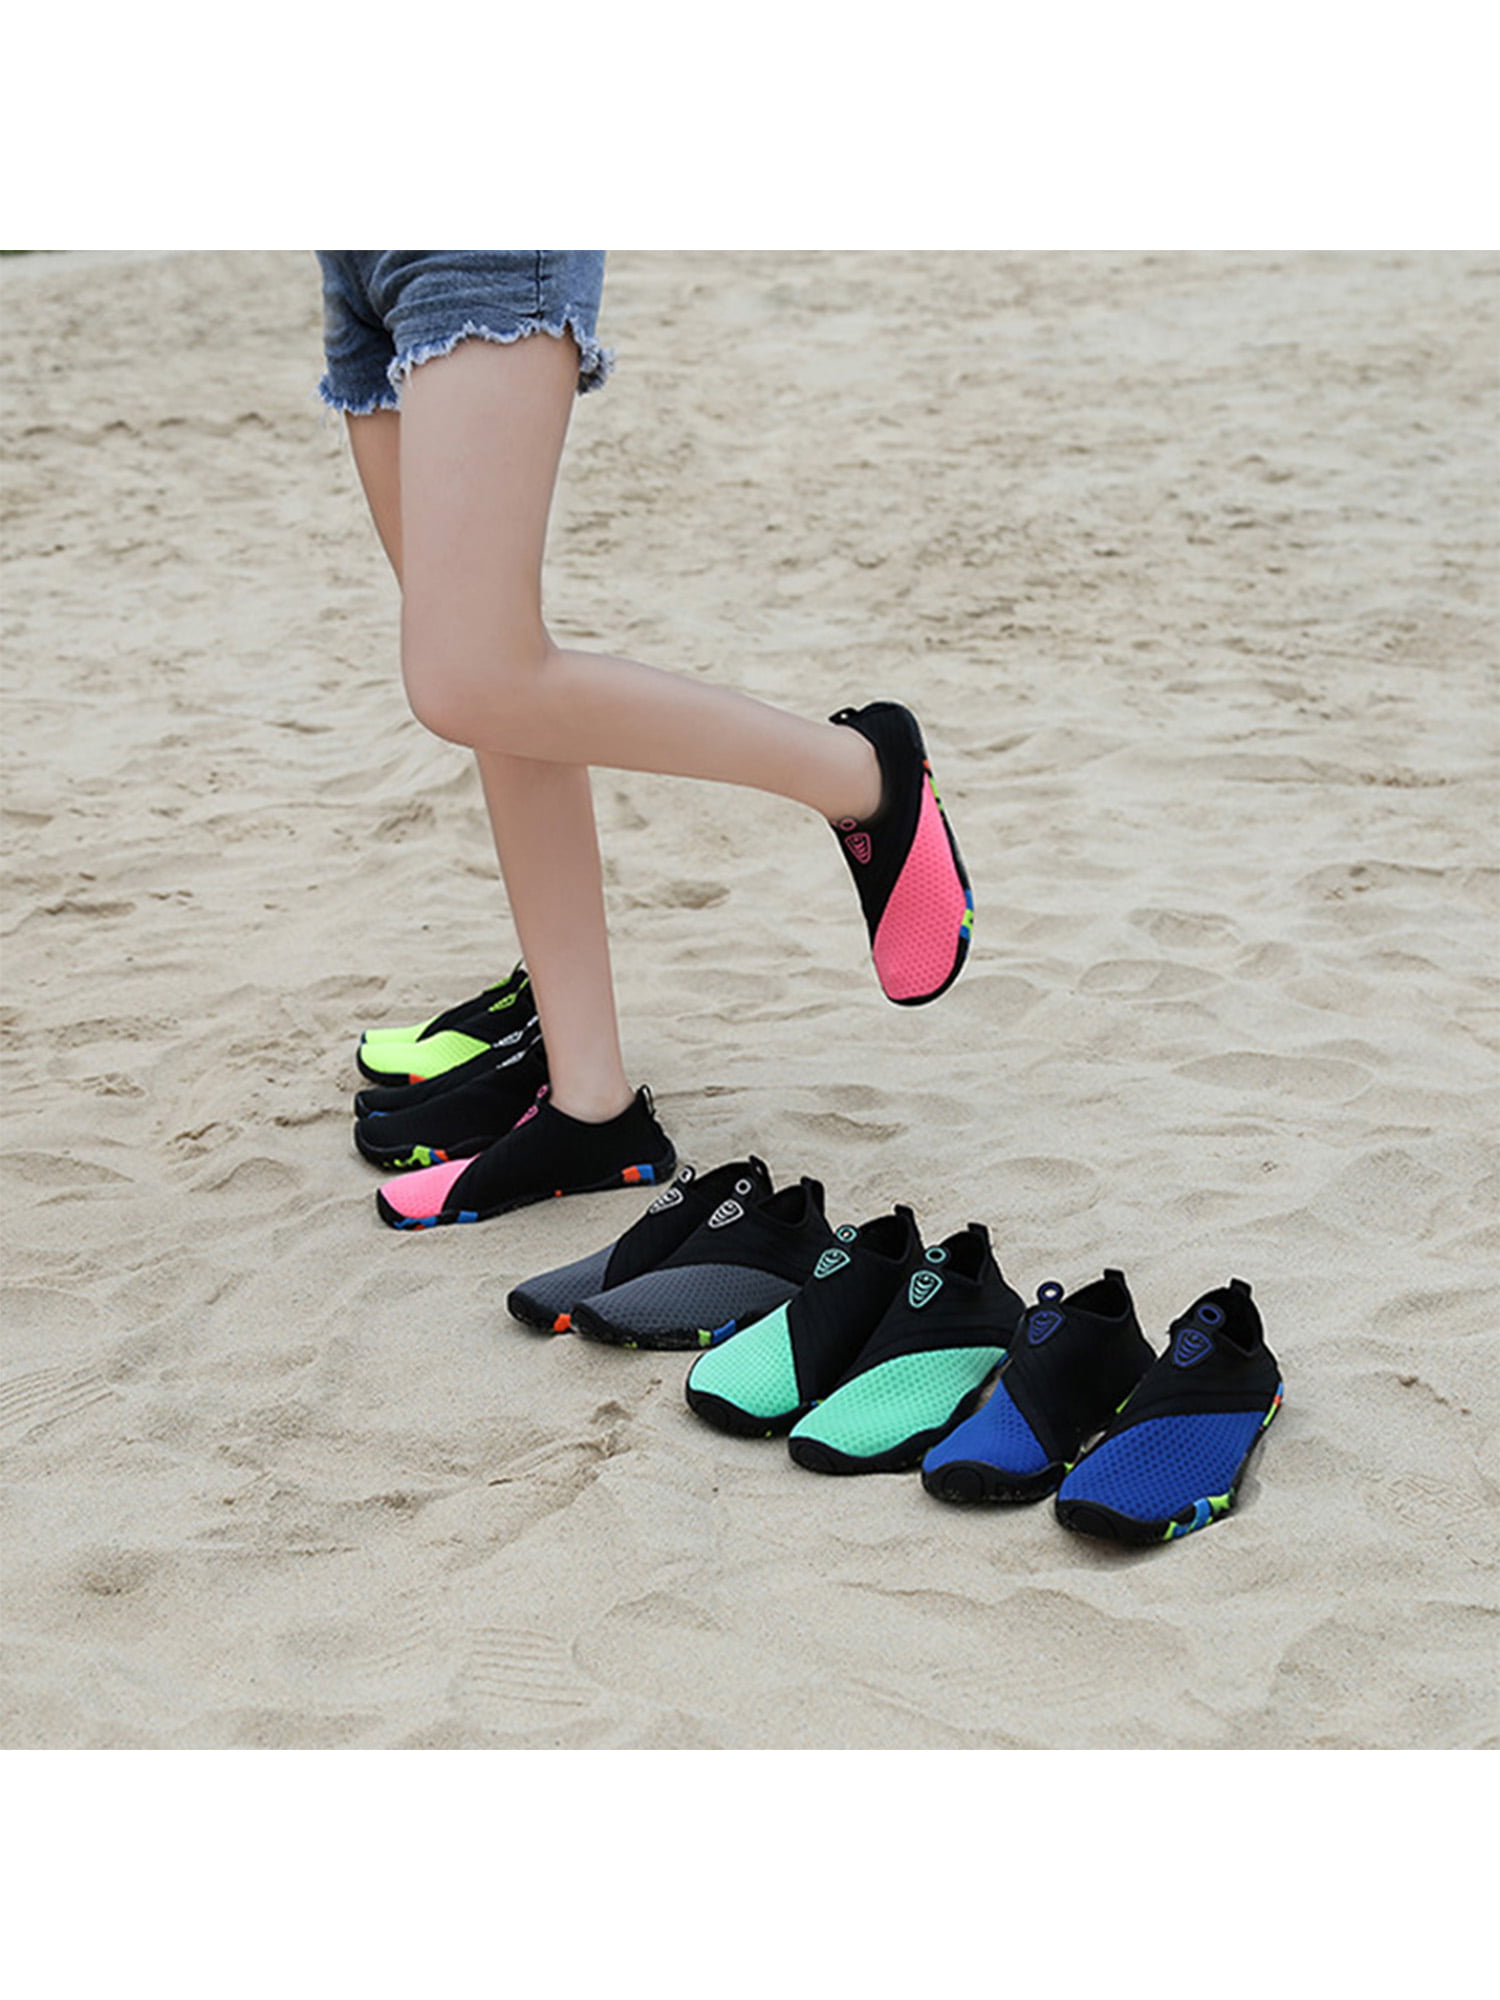 Mens Womens Water Shoes Quick Dry Barefoot for Swim Diving Surf Aqua Sport Beach 